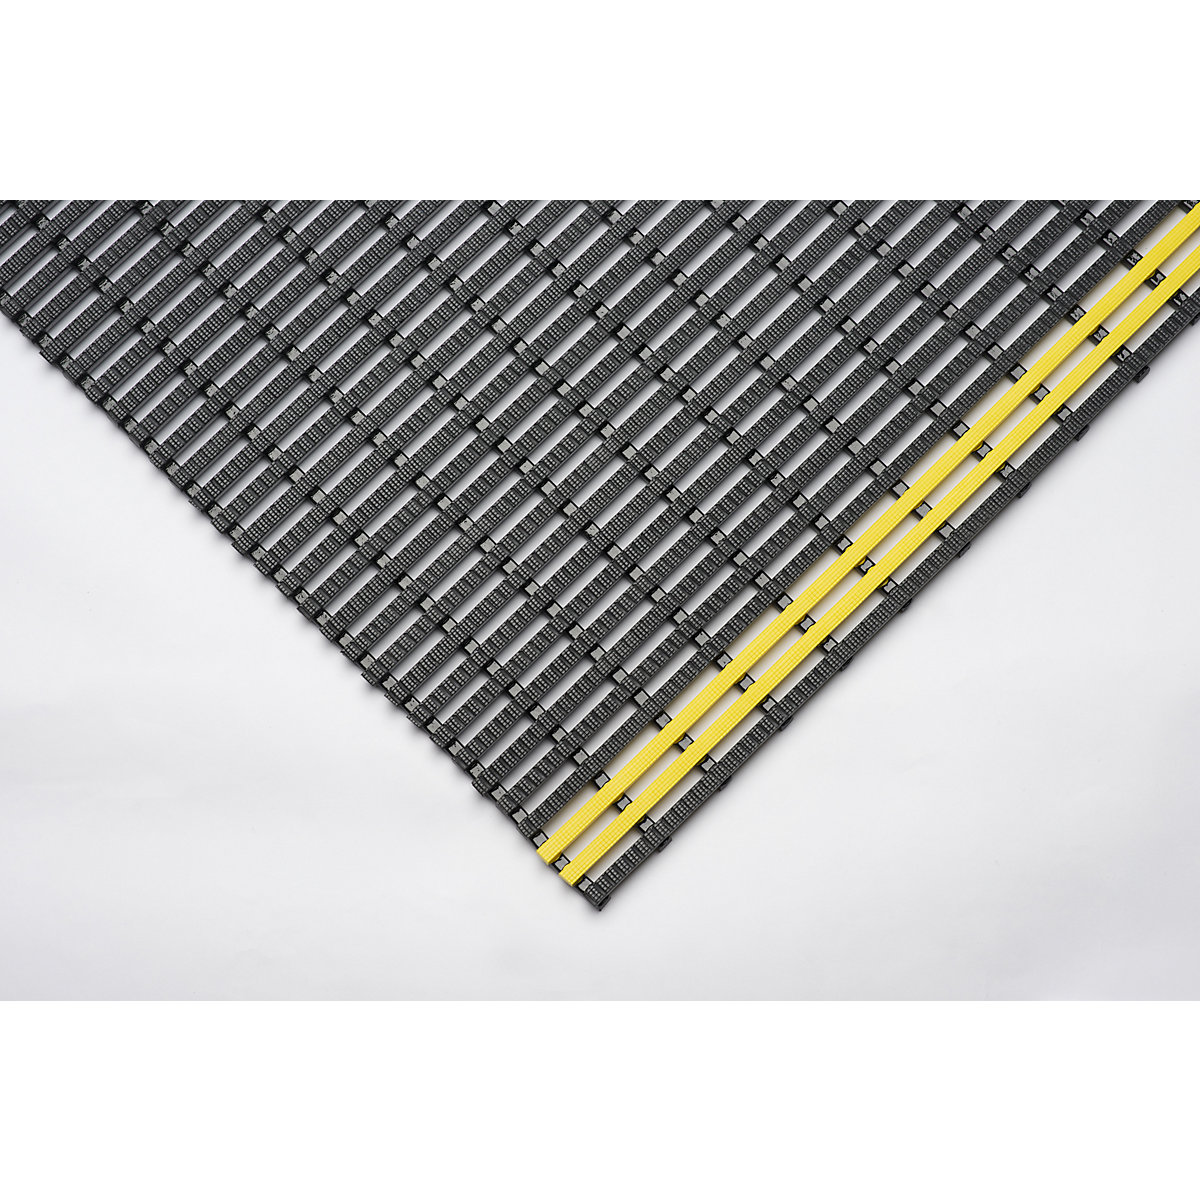 Industrial matting, anti-slip